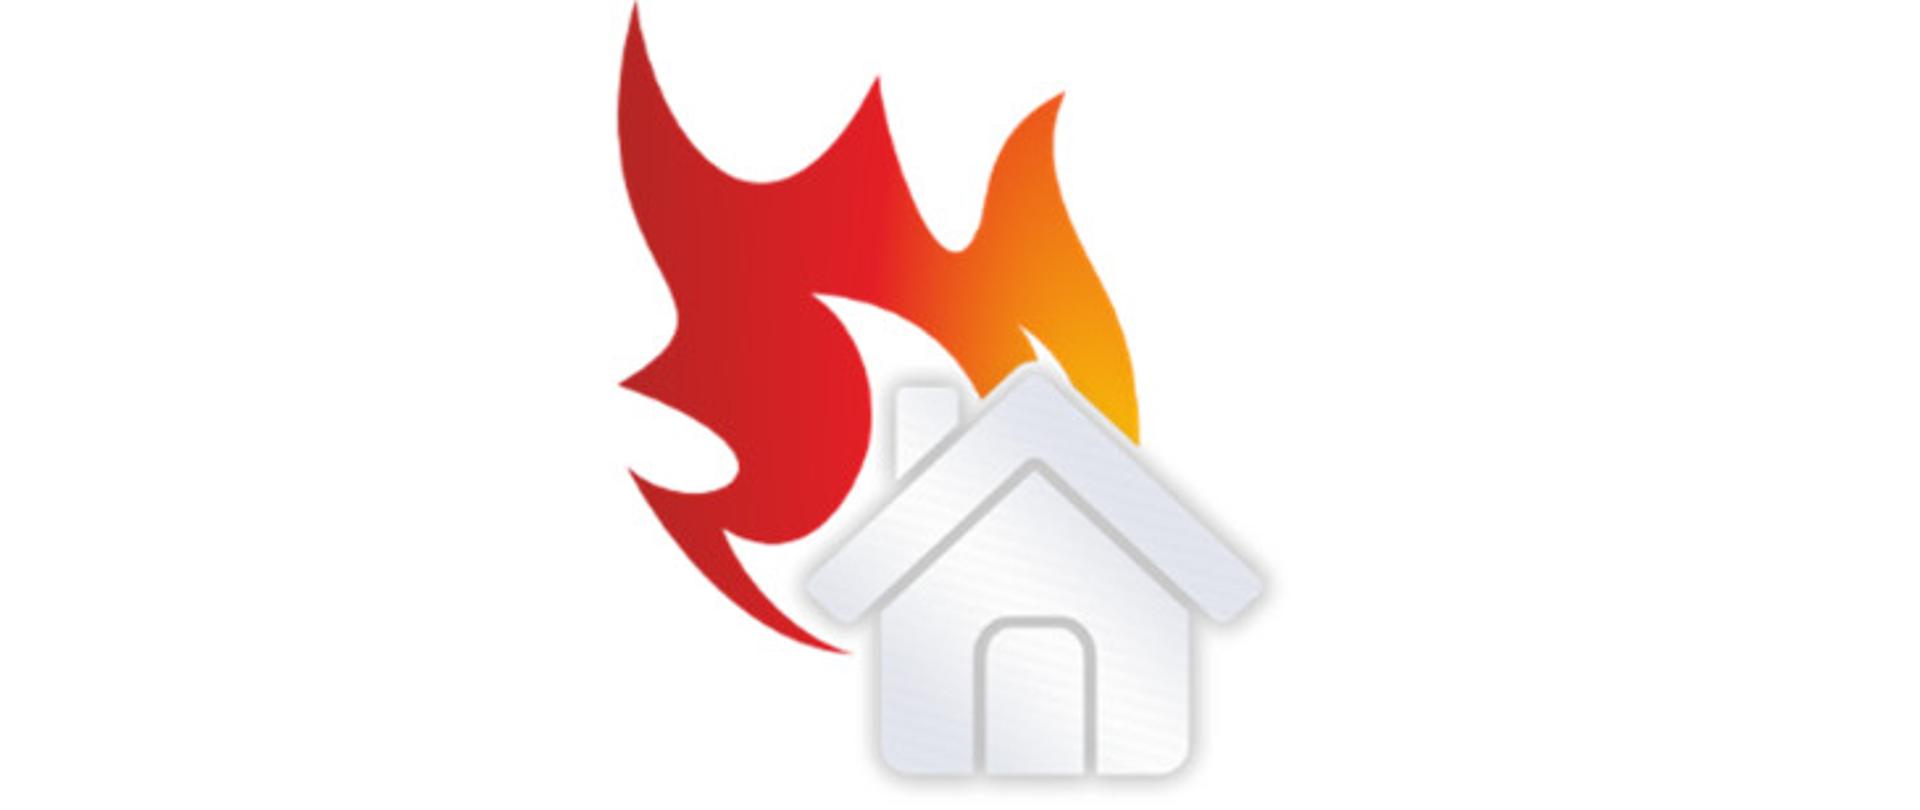 rysunek domu objętego ogniem